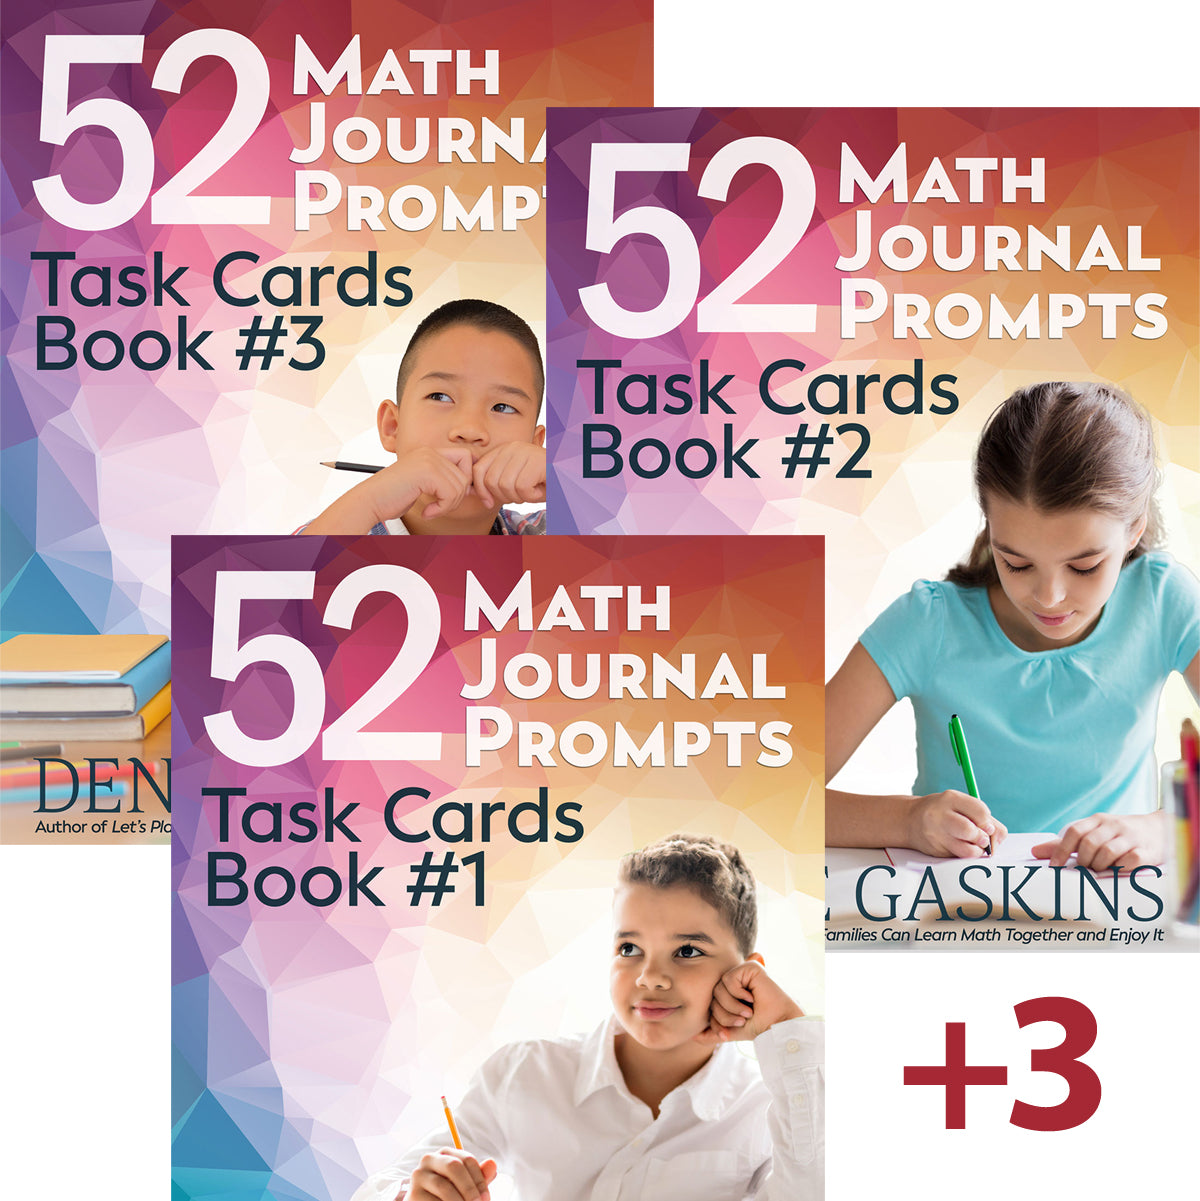 Math journaling task cards bundle printable activity books by Denise Gaskins